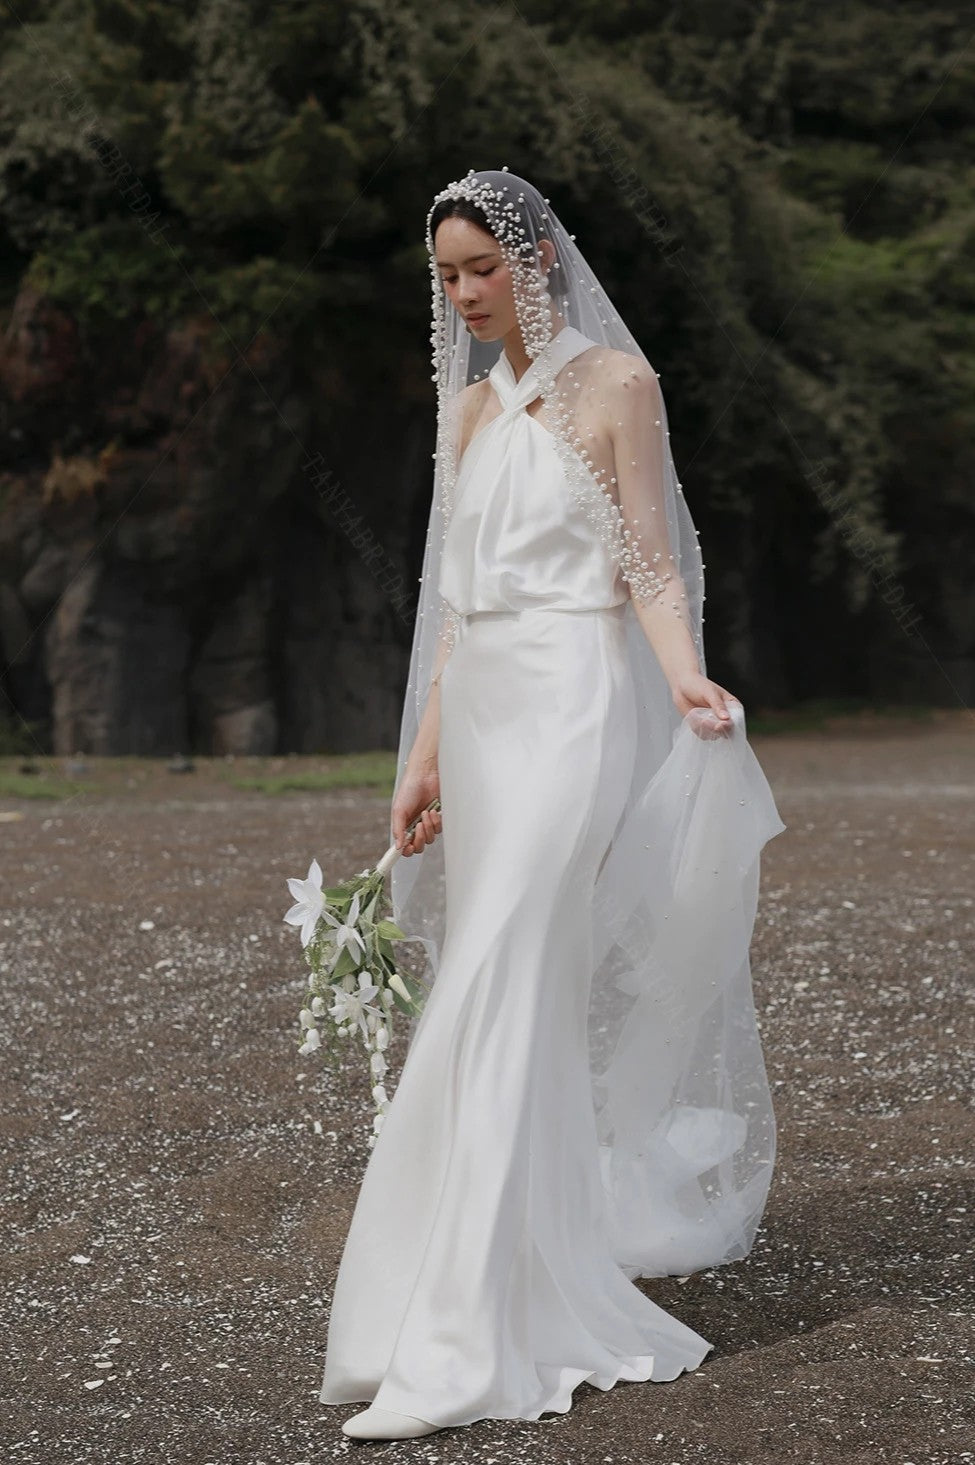 Shoulder Length Cut Edge Bridal Veil Two-Layers Waltz Veils Adult Women  Headwear